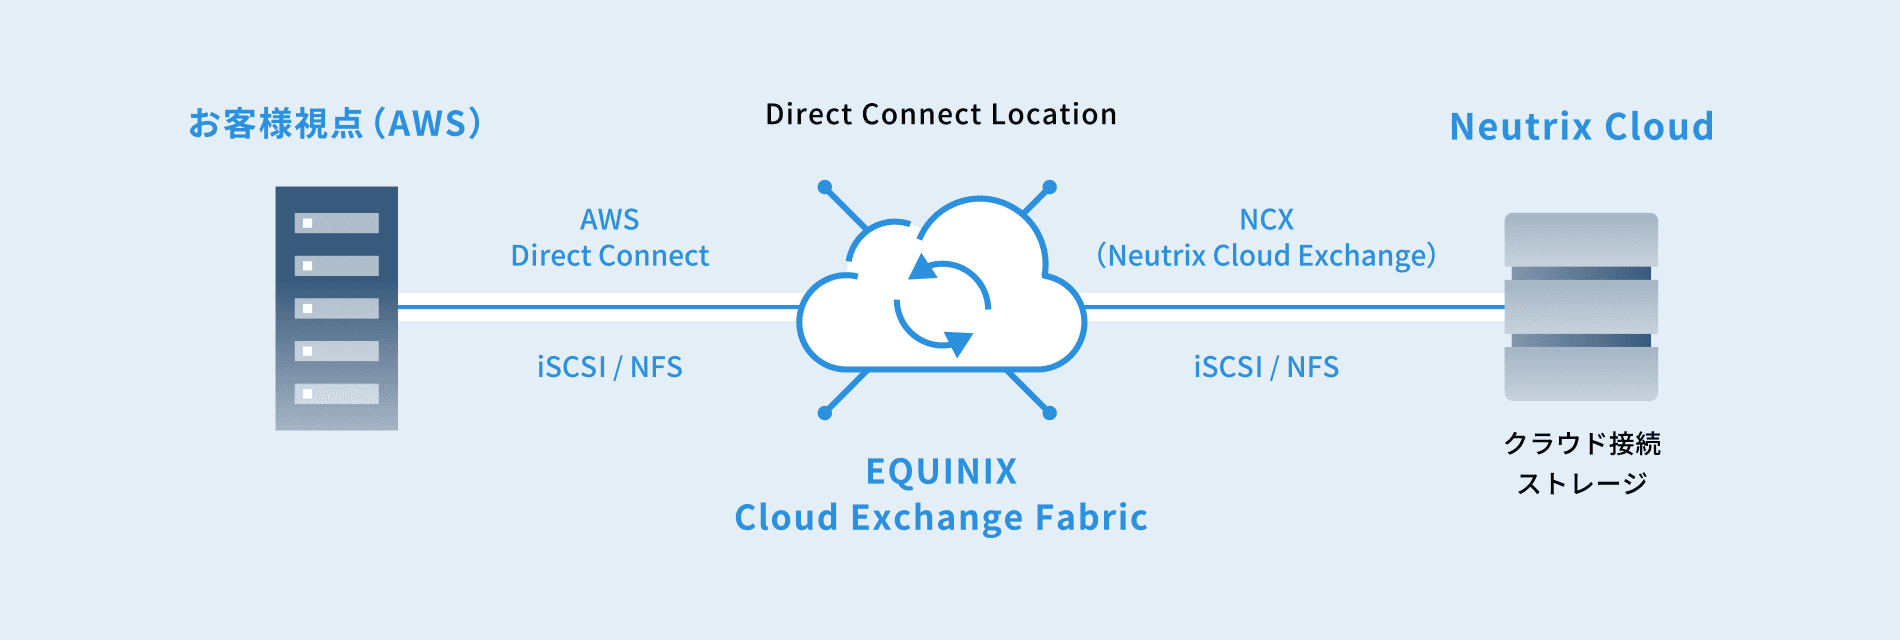 Neutrix Cloudでのセキュアデータ用ストレージ既存環境との接続イメージ図